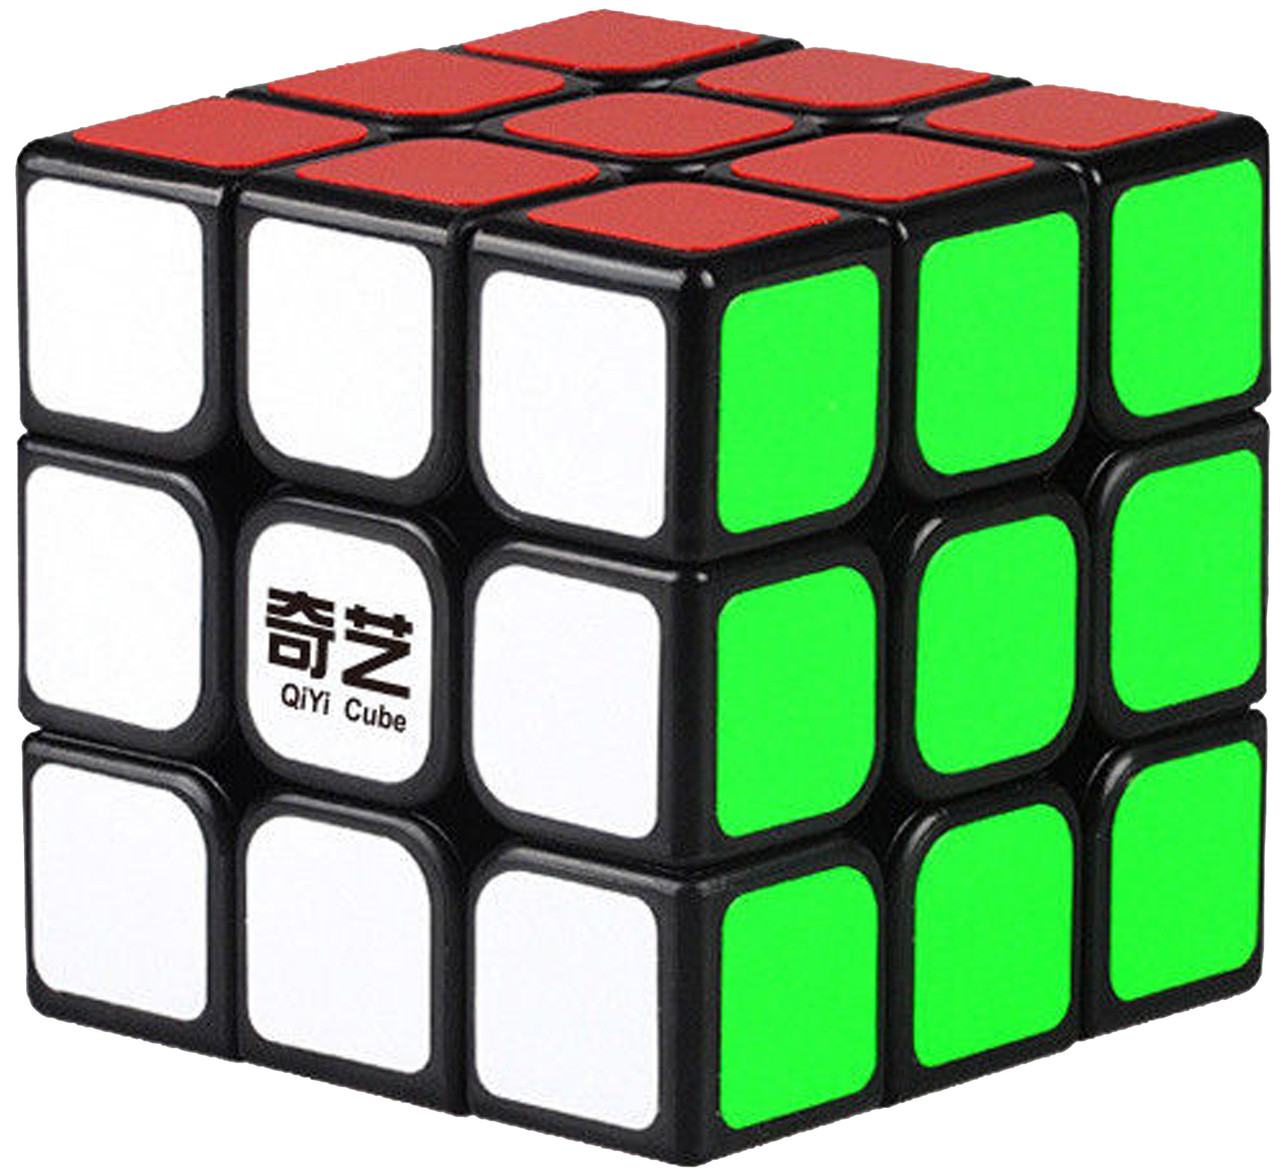 3x3x3 Speed Cube 5.6cm Professional Magic Cube High Quality